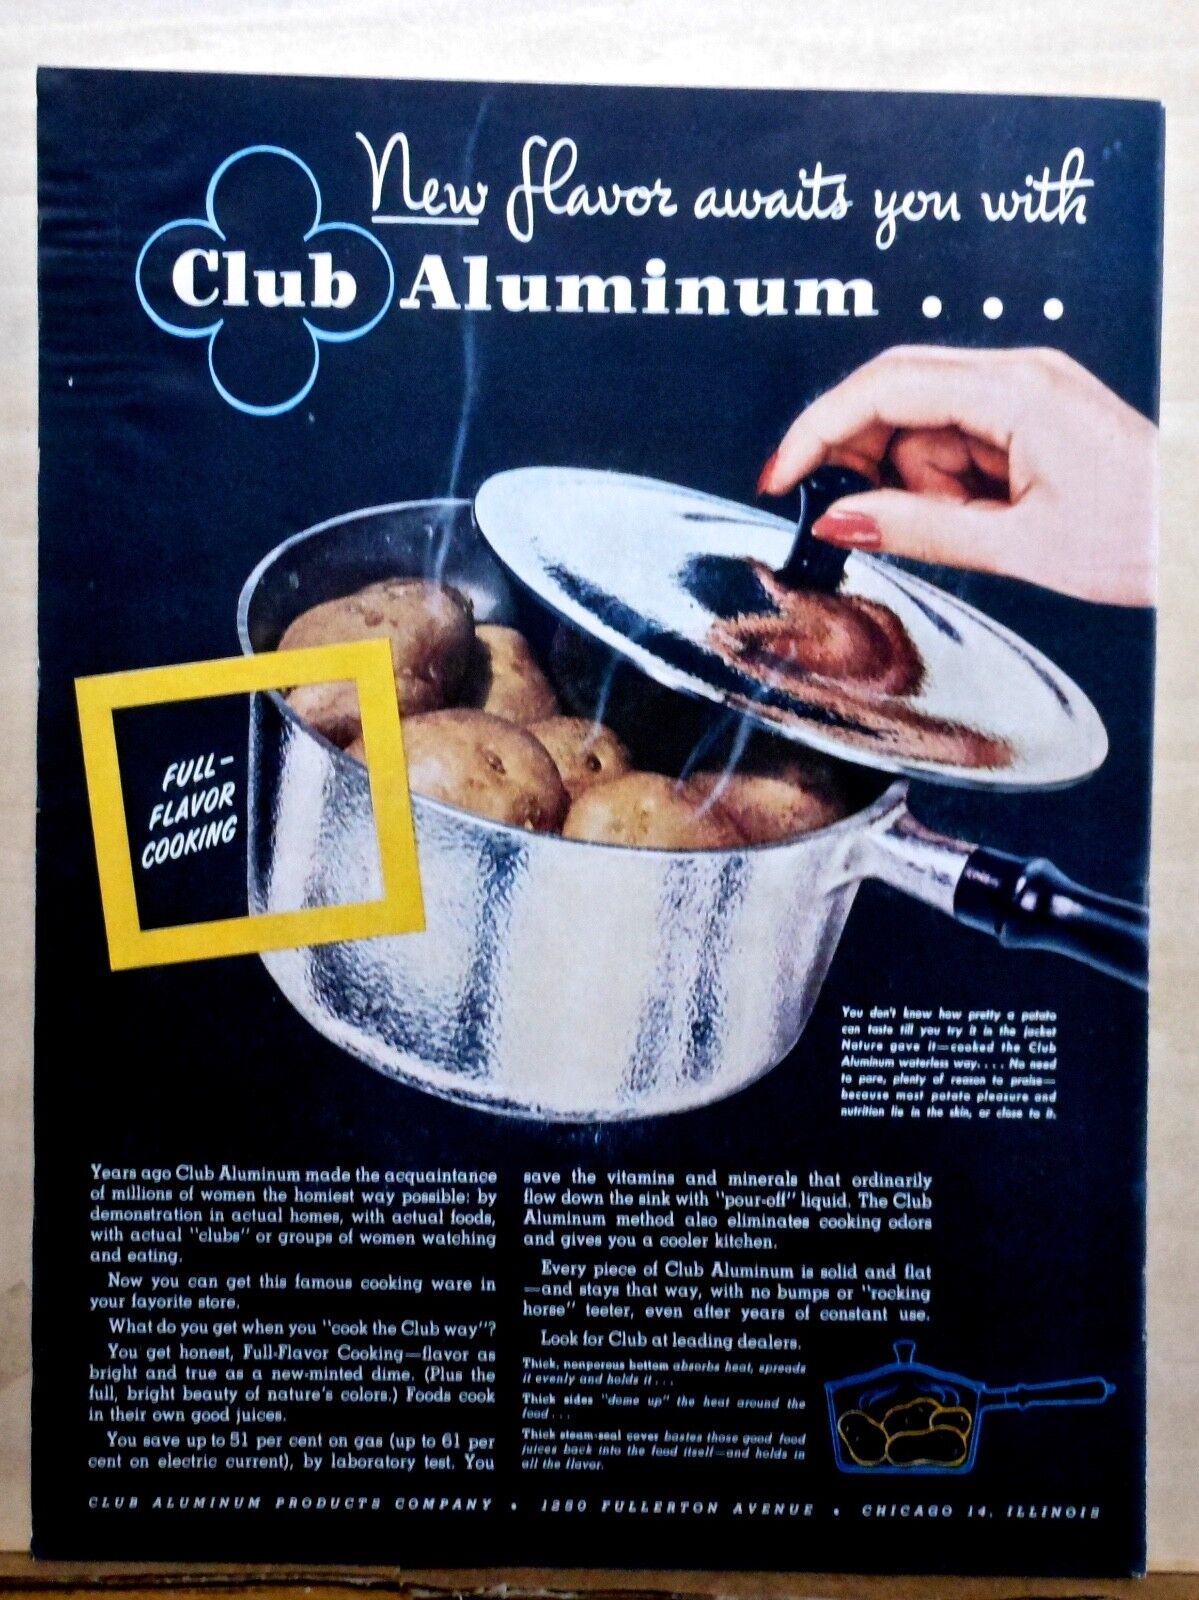 1946 magazine ad for Club Aluminum Cookware - New Flavor Awaits You, Hammercraft